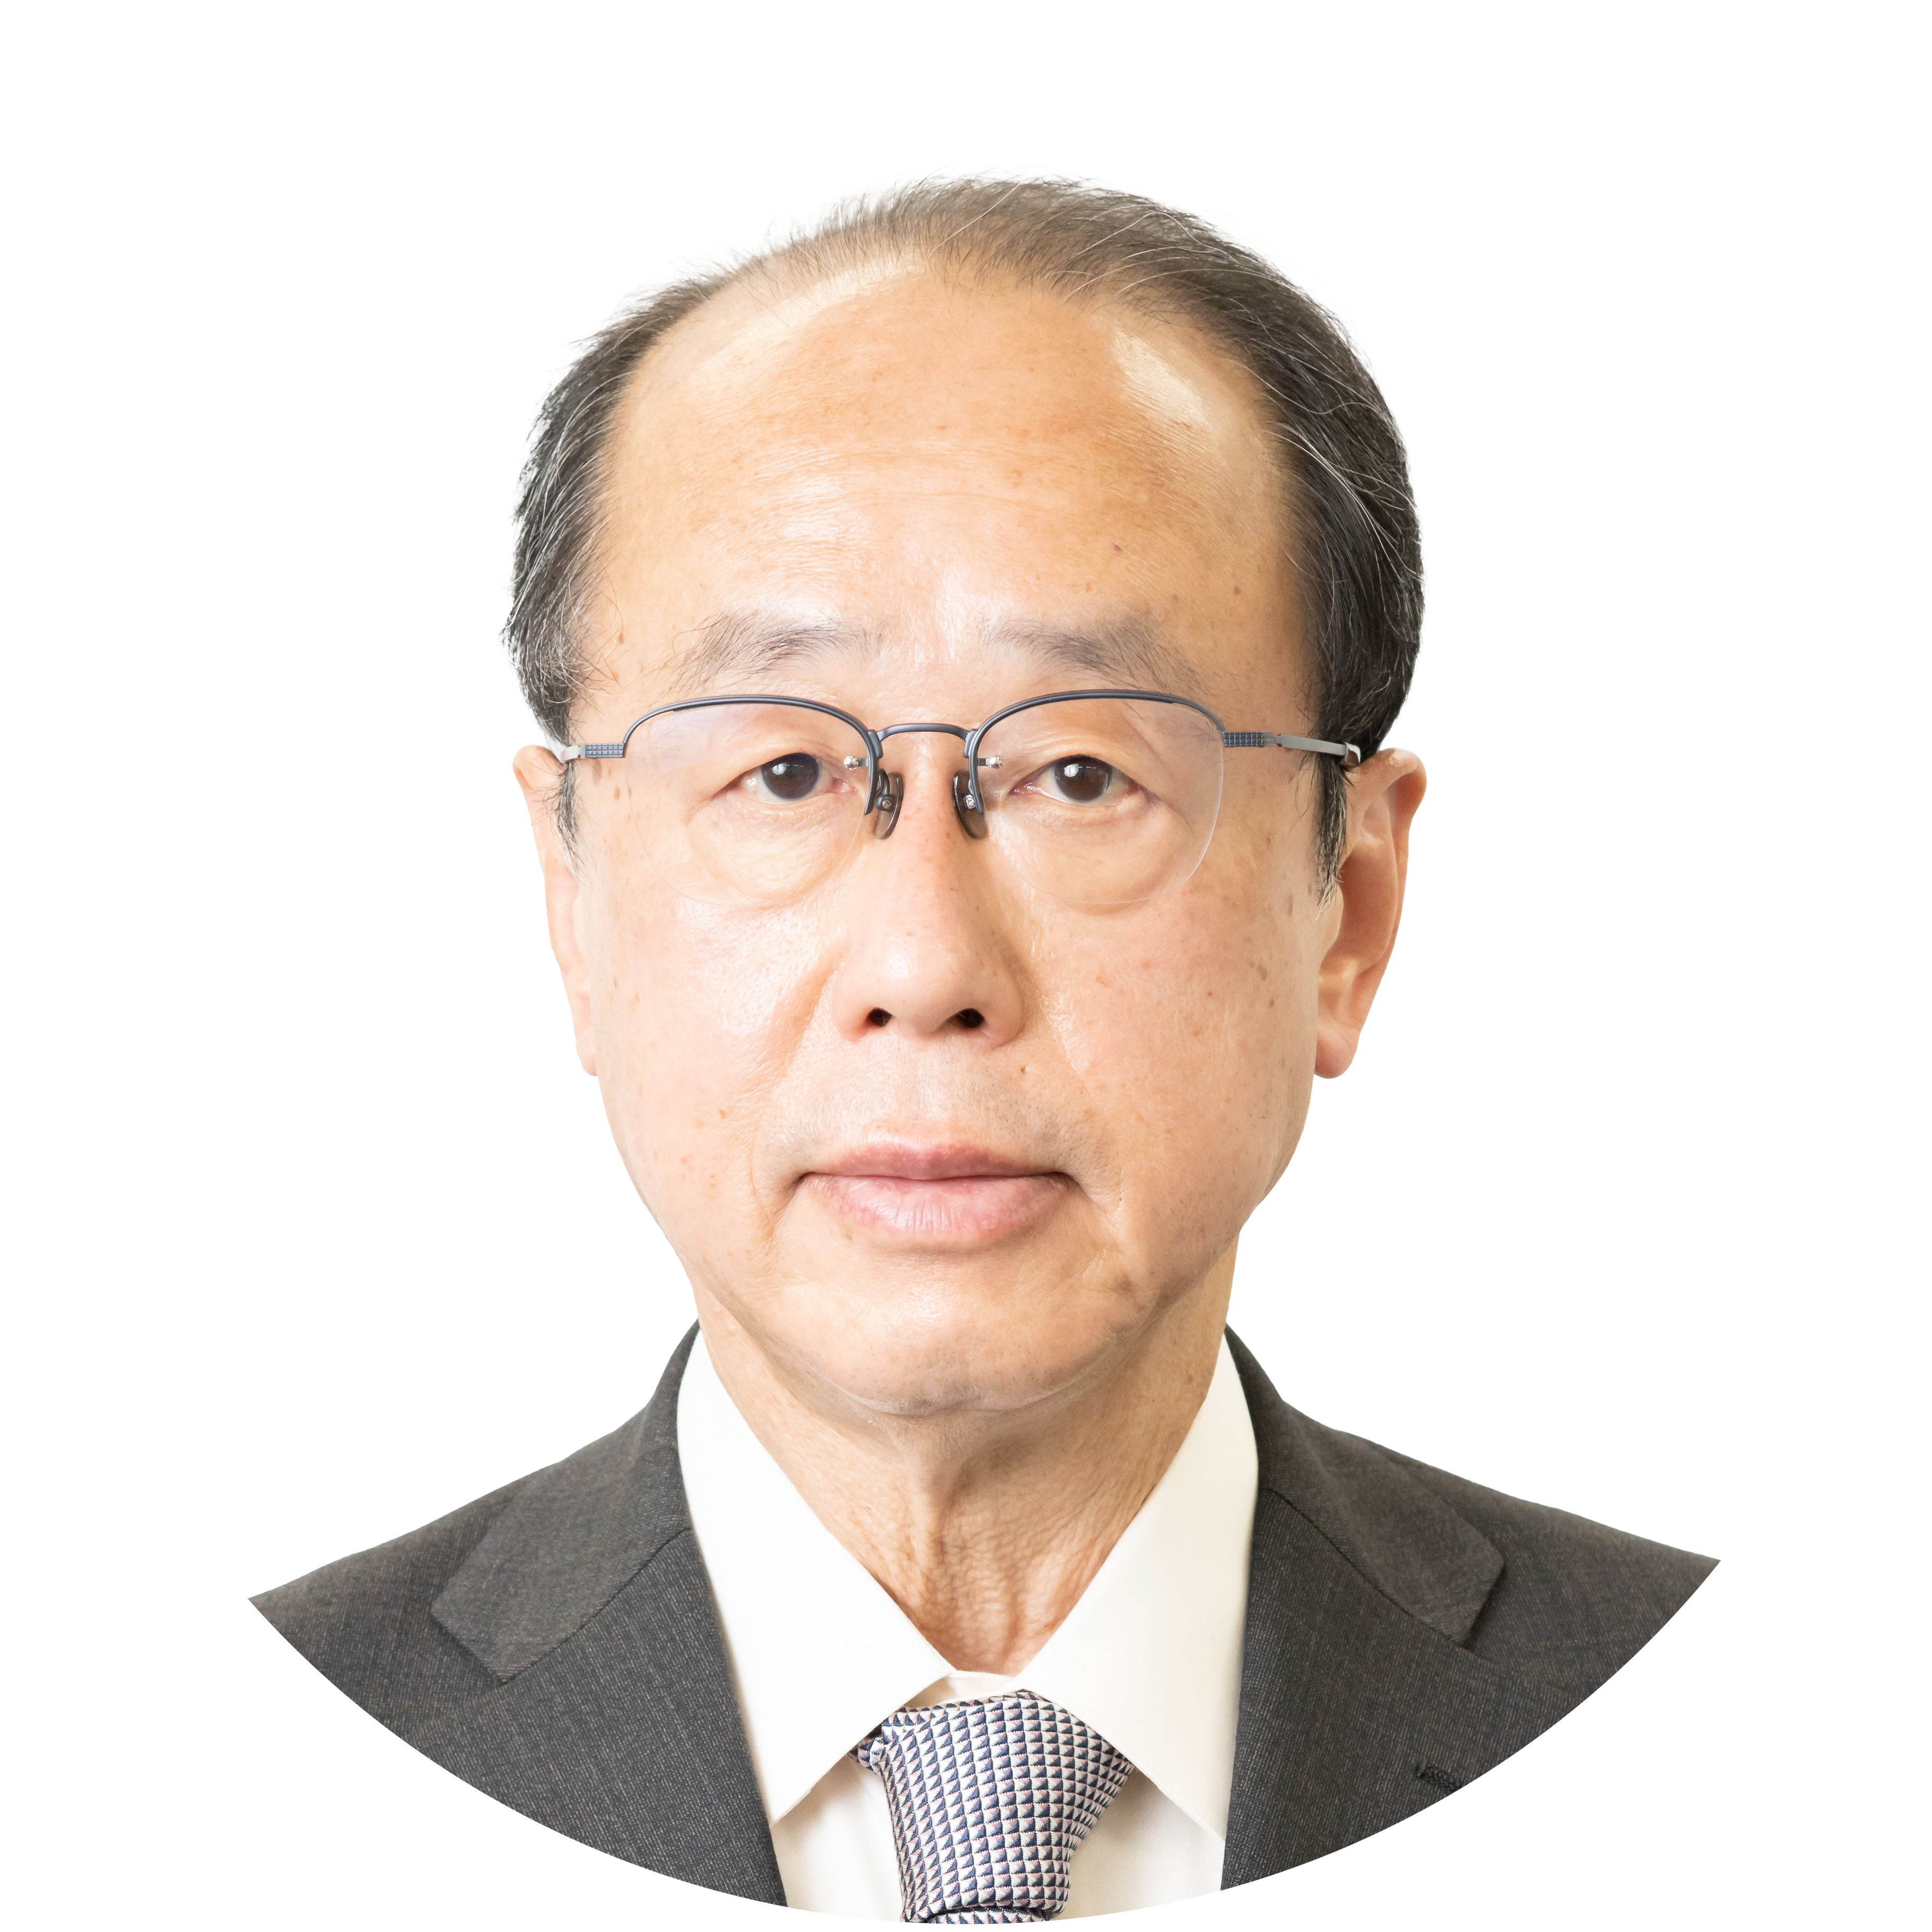 Dr. Hiroto Izumi